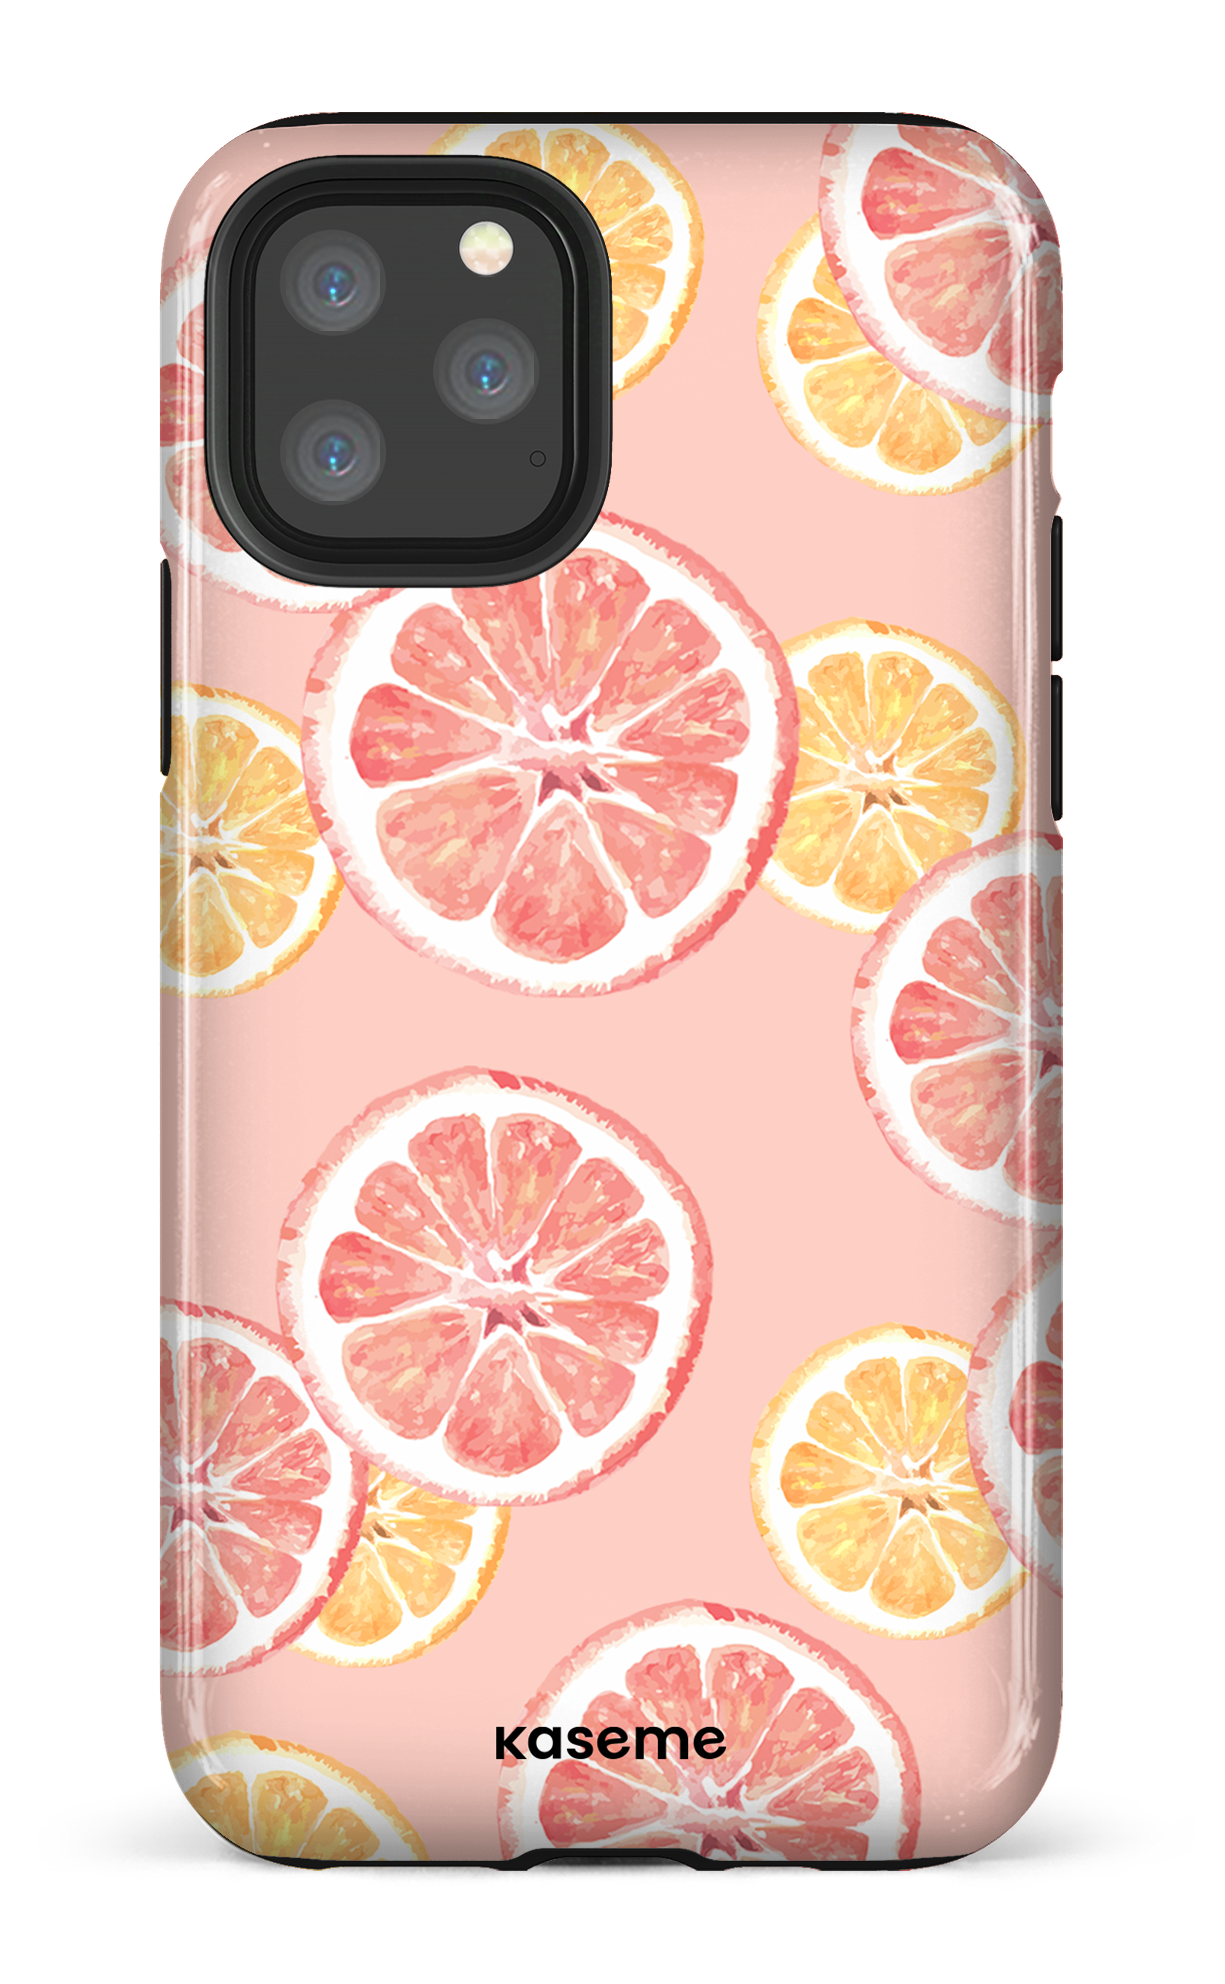 Pink Lemonade phone case - iPhone 11 Pro